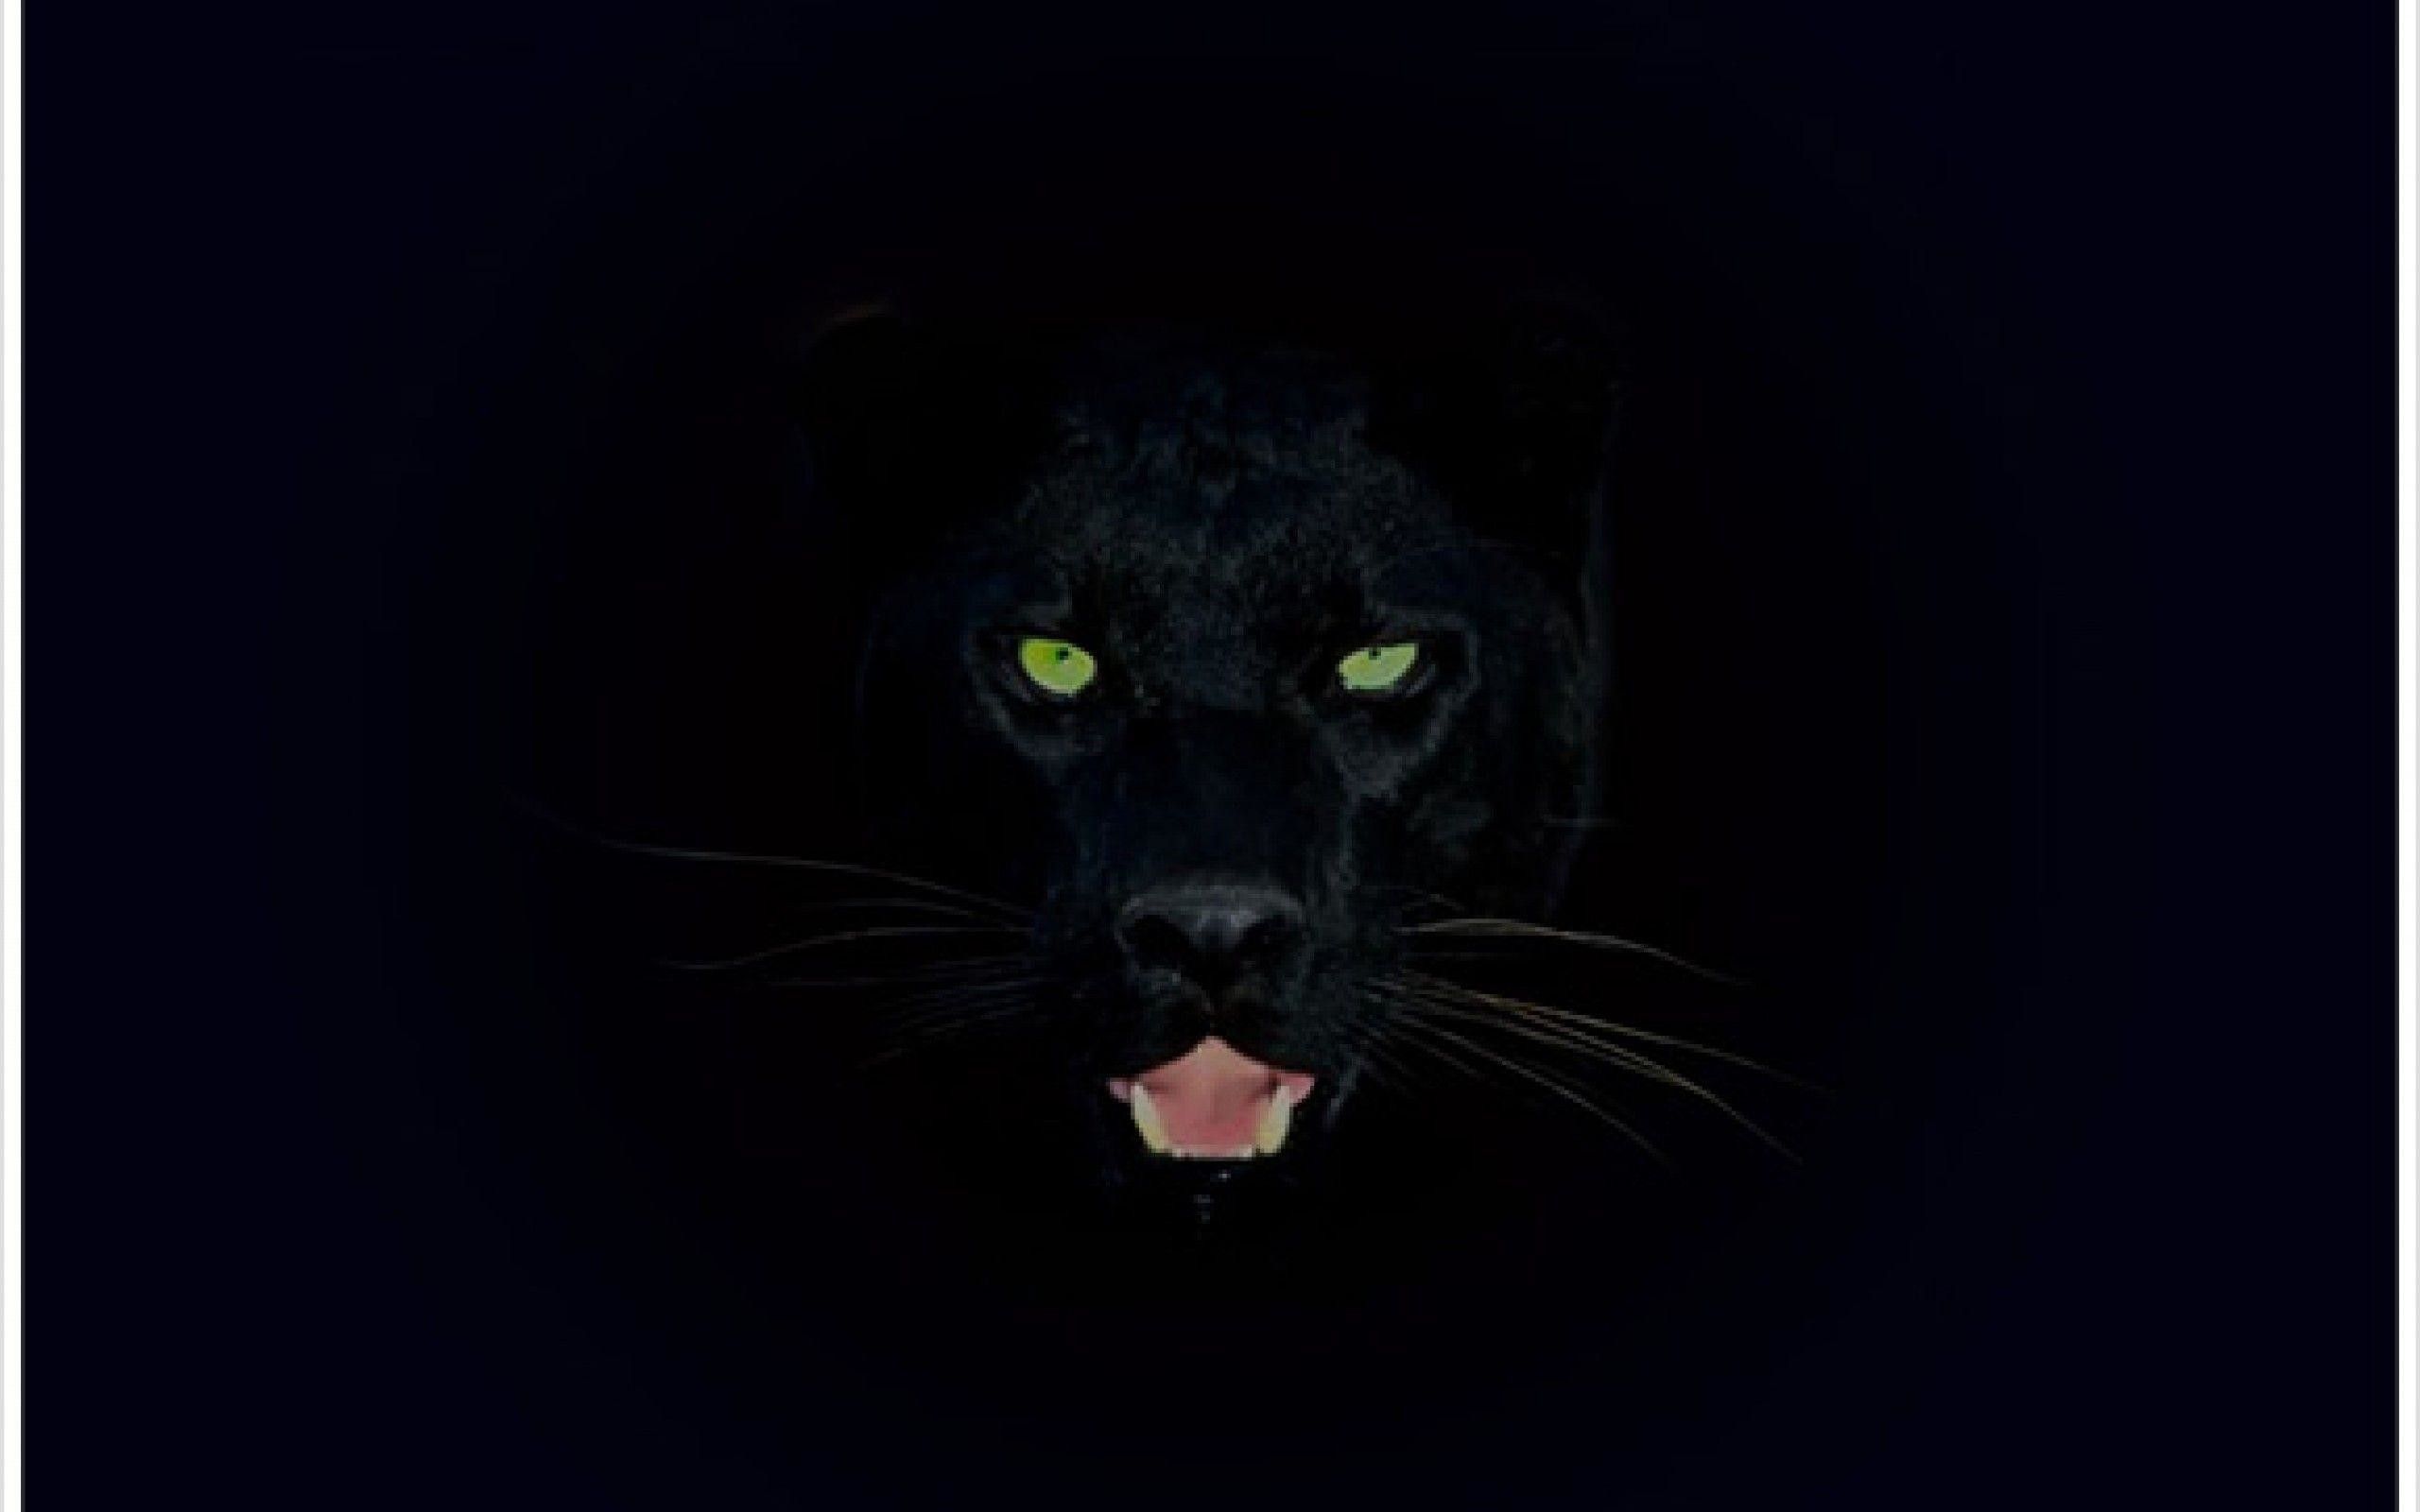 Black Panther Background